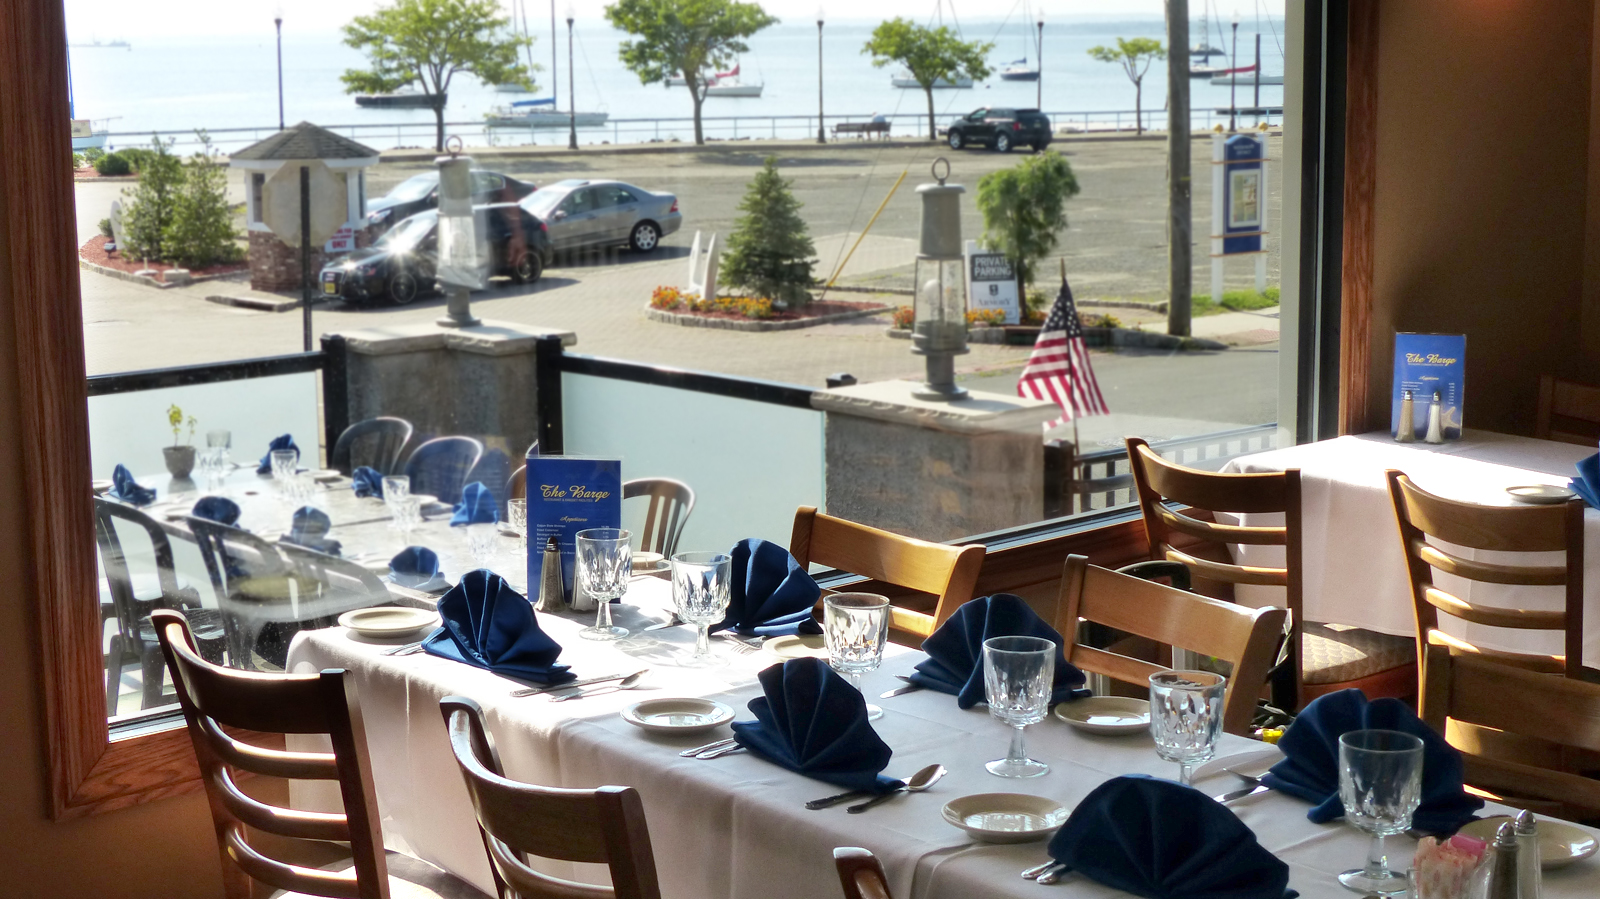 Photos - The Barge Perth Amboy NJ - Restaurants - Restaurant Passion